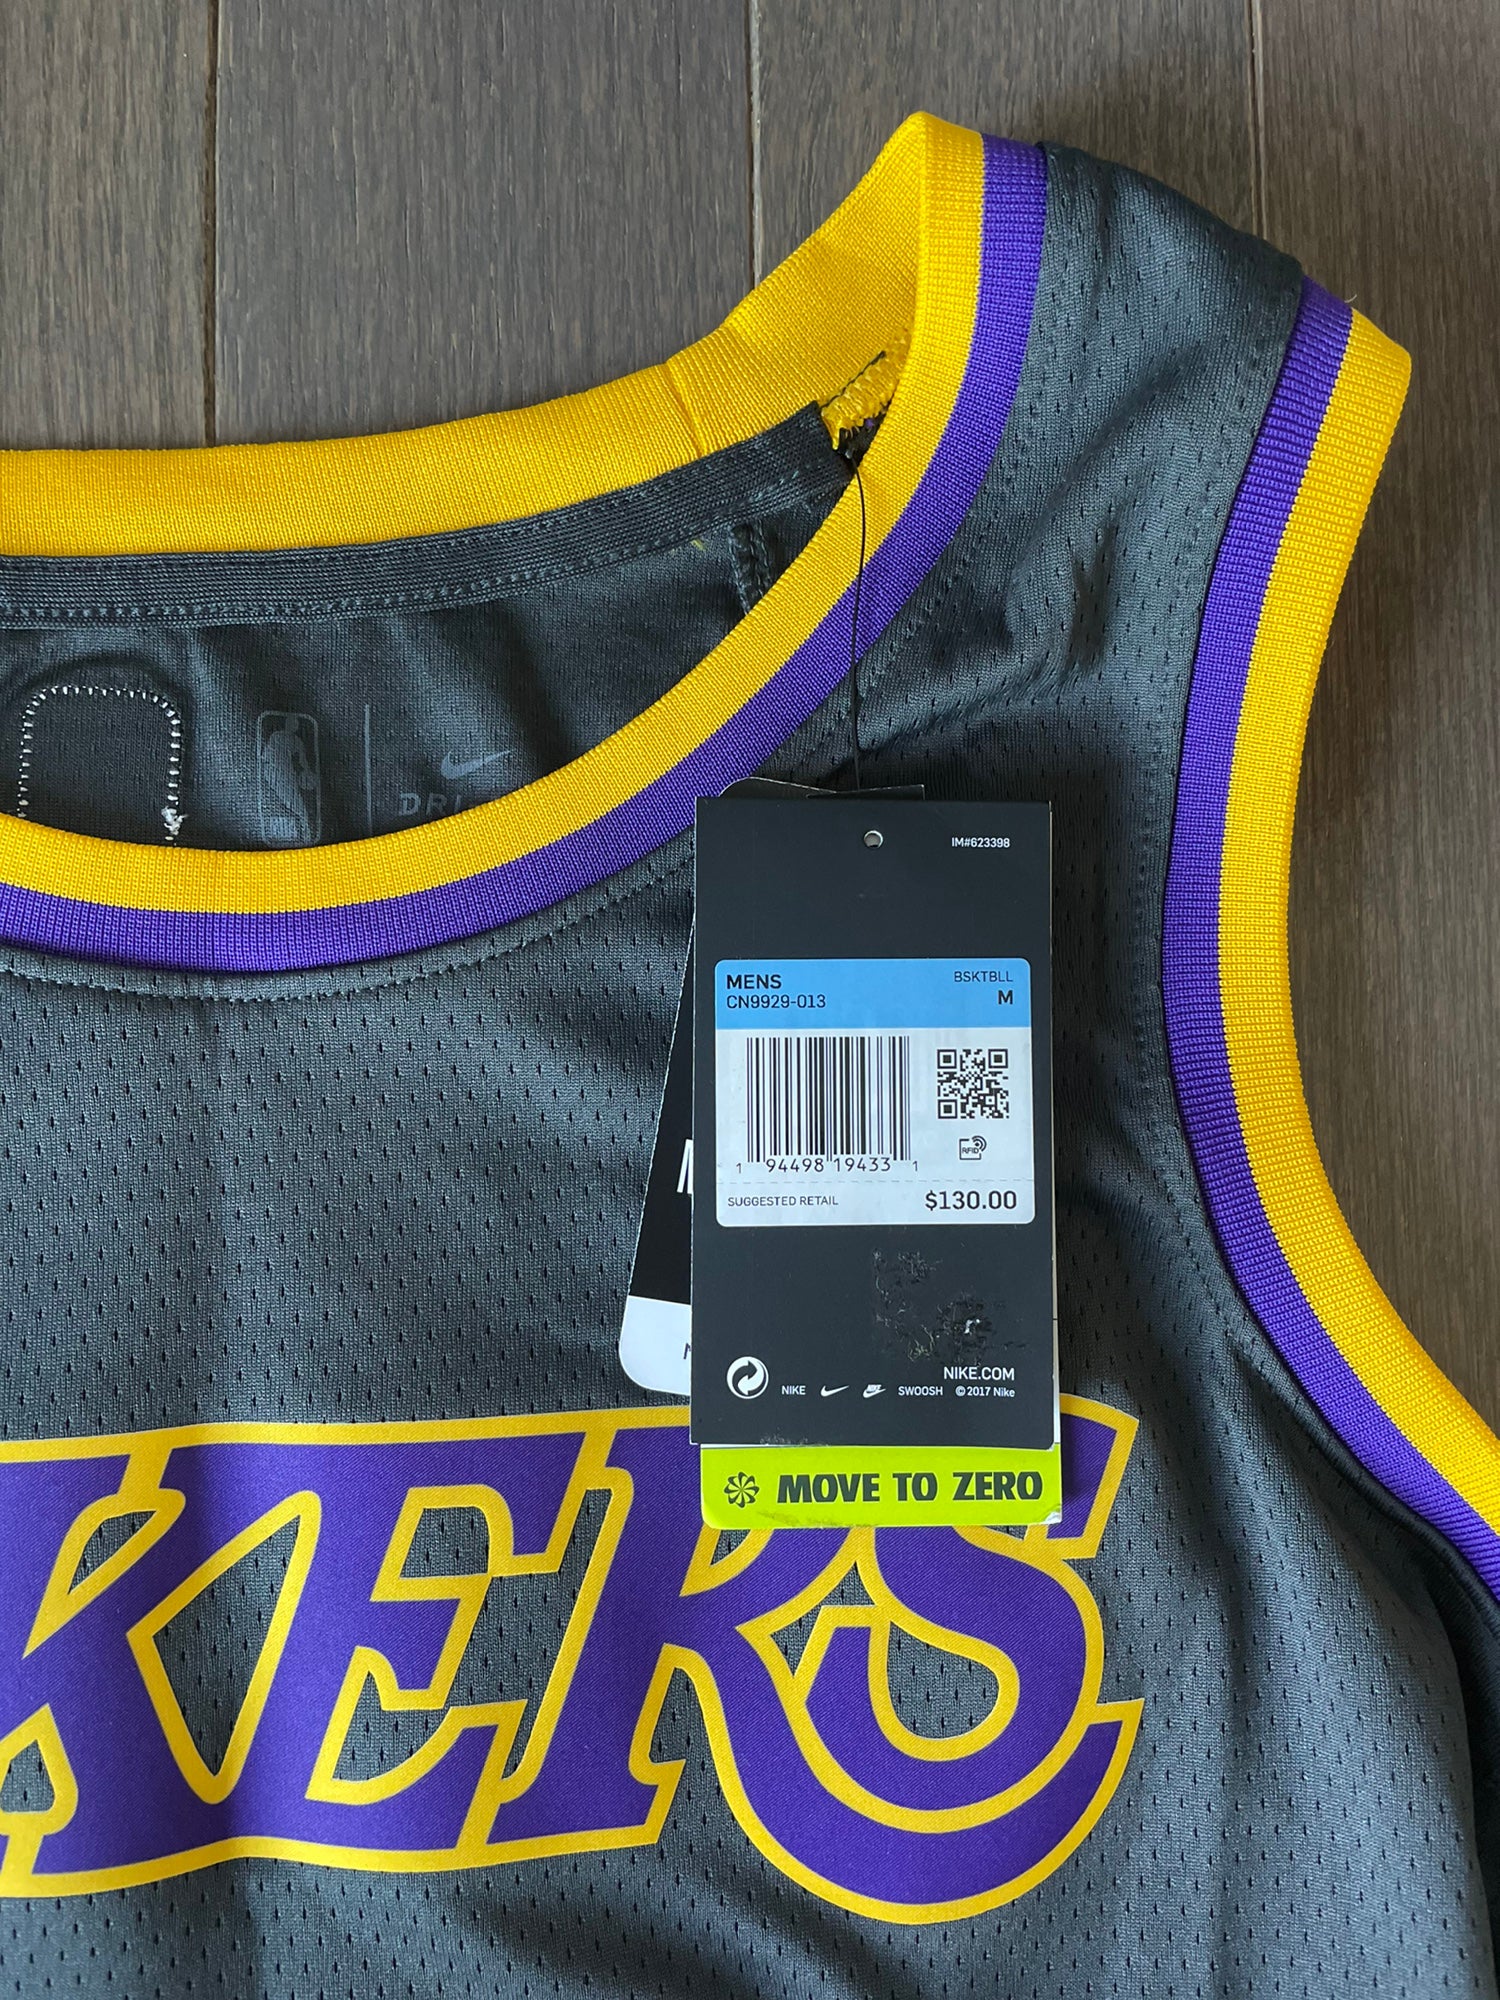 Men's Los Angeles Lakers LeBron James Nike Black Earned Edition